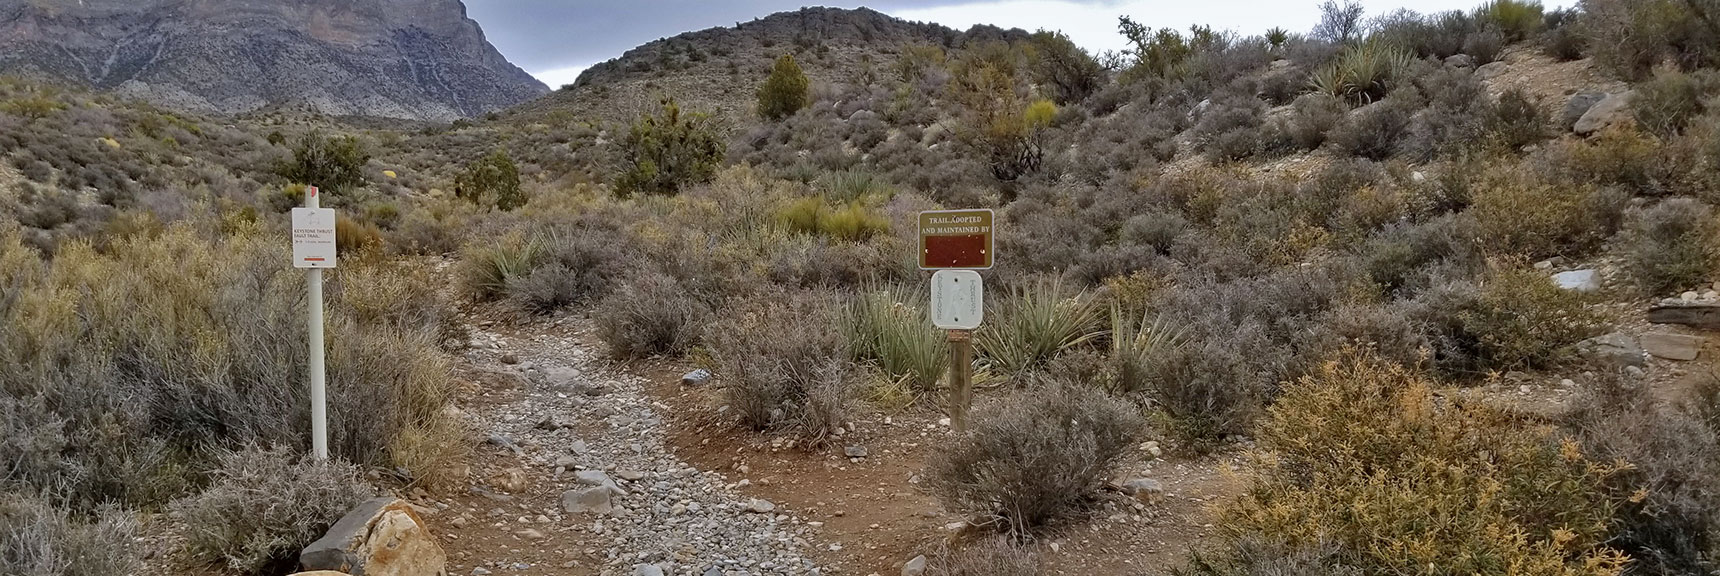 Keystone Thurst Trail and White Rock Mountain Loop Trail Divide at White Rock Mountain Loop in Red Rock Park, Nevada